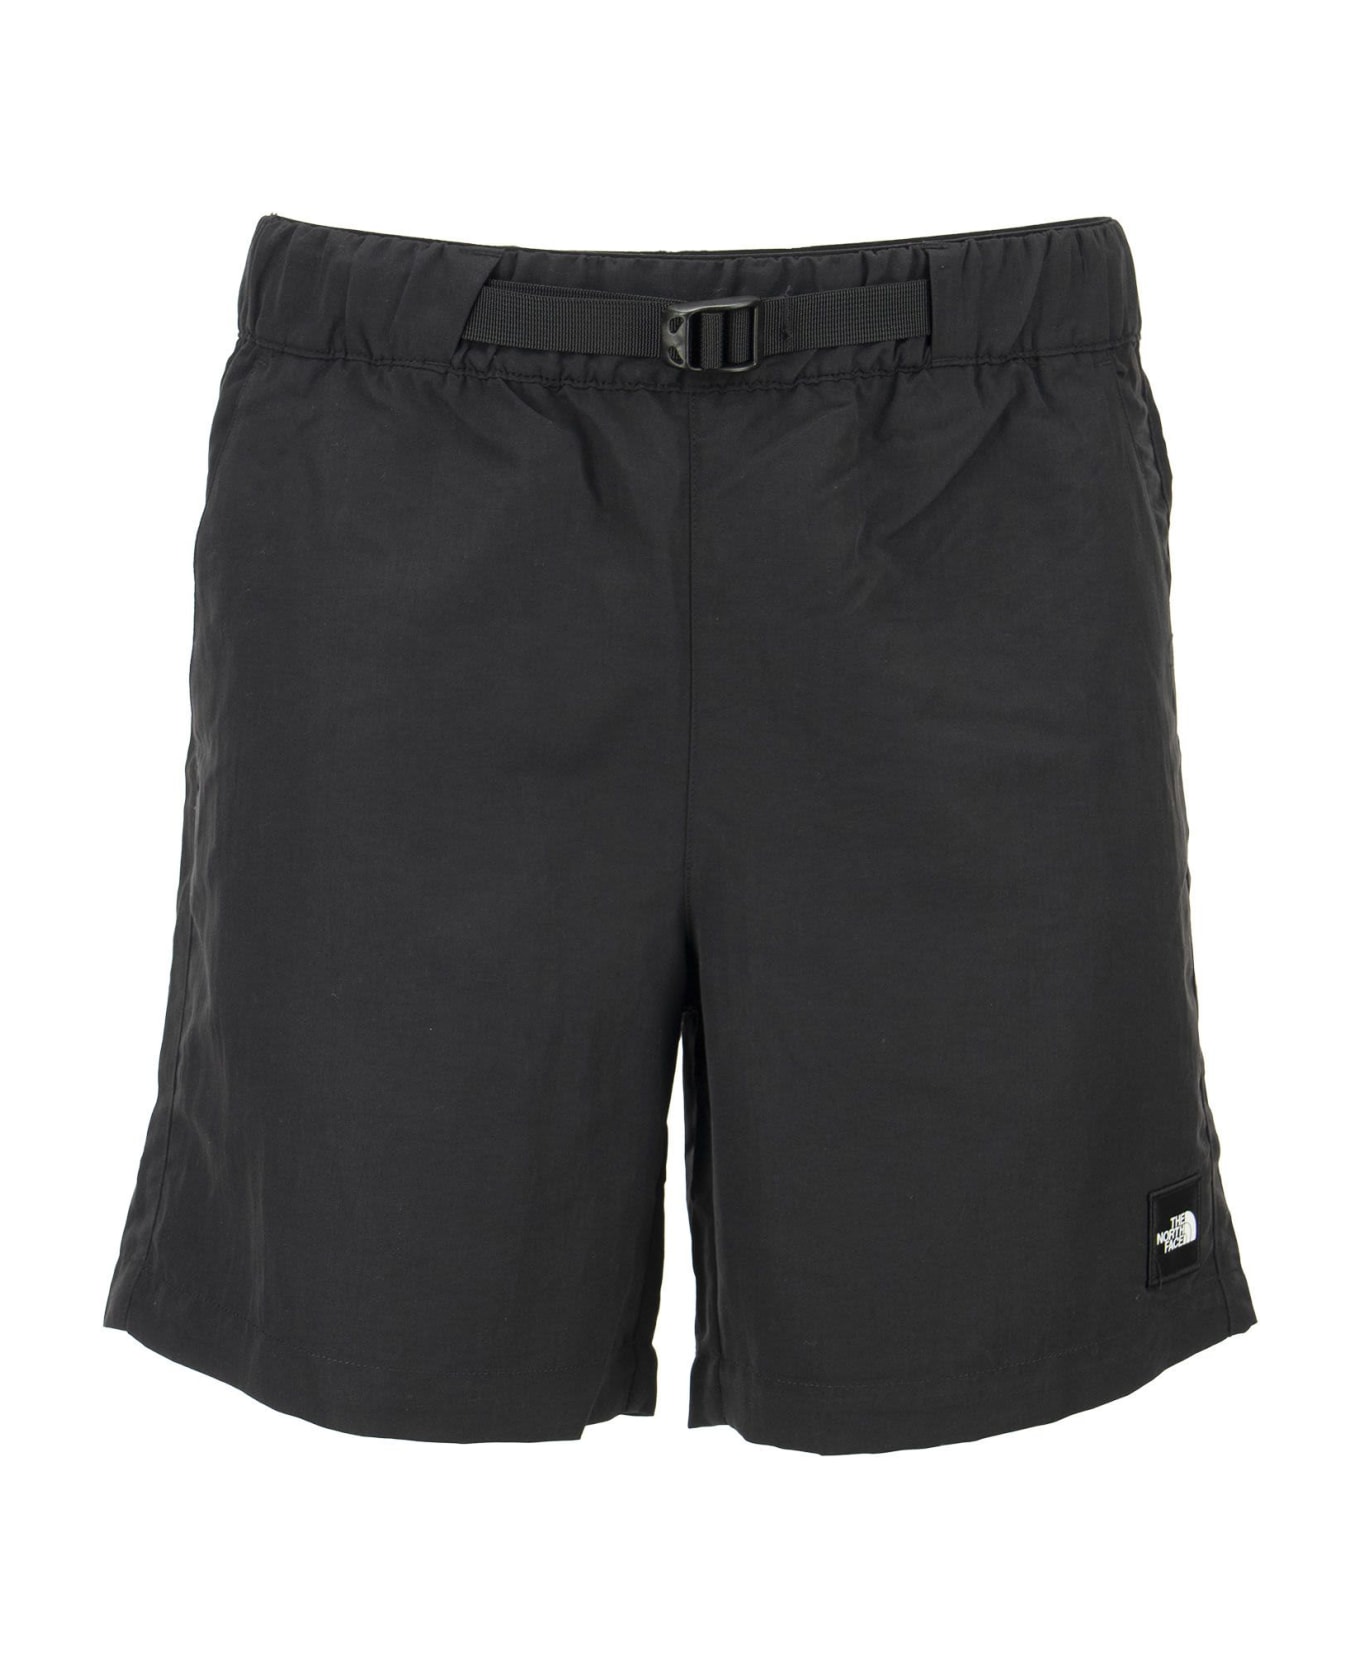 The North Face Men's Short Shorts - Black ショートパンツ